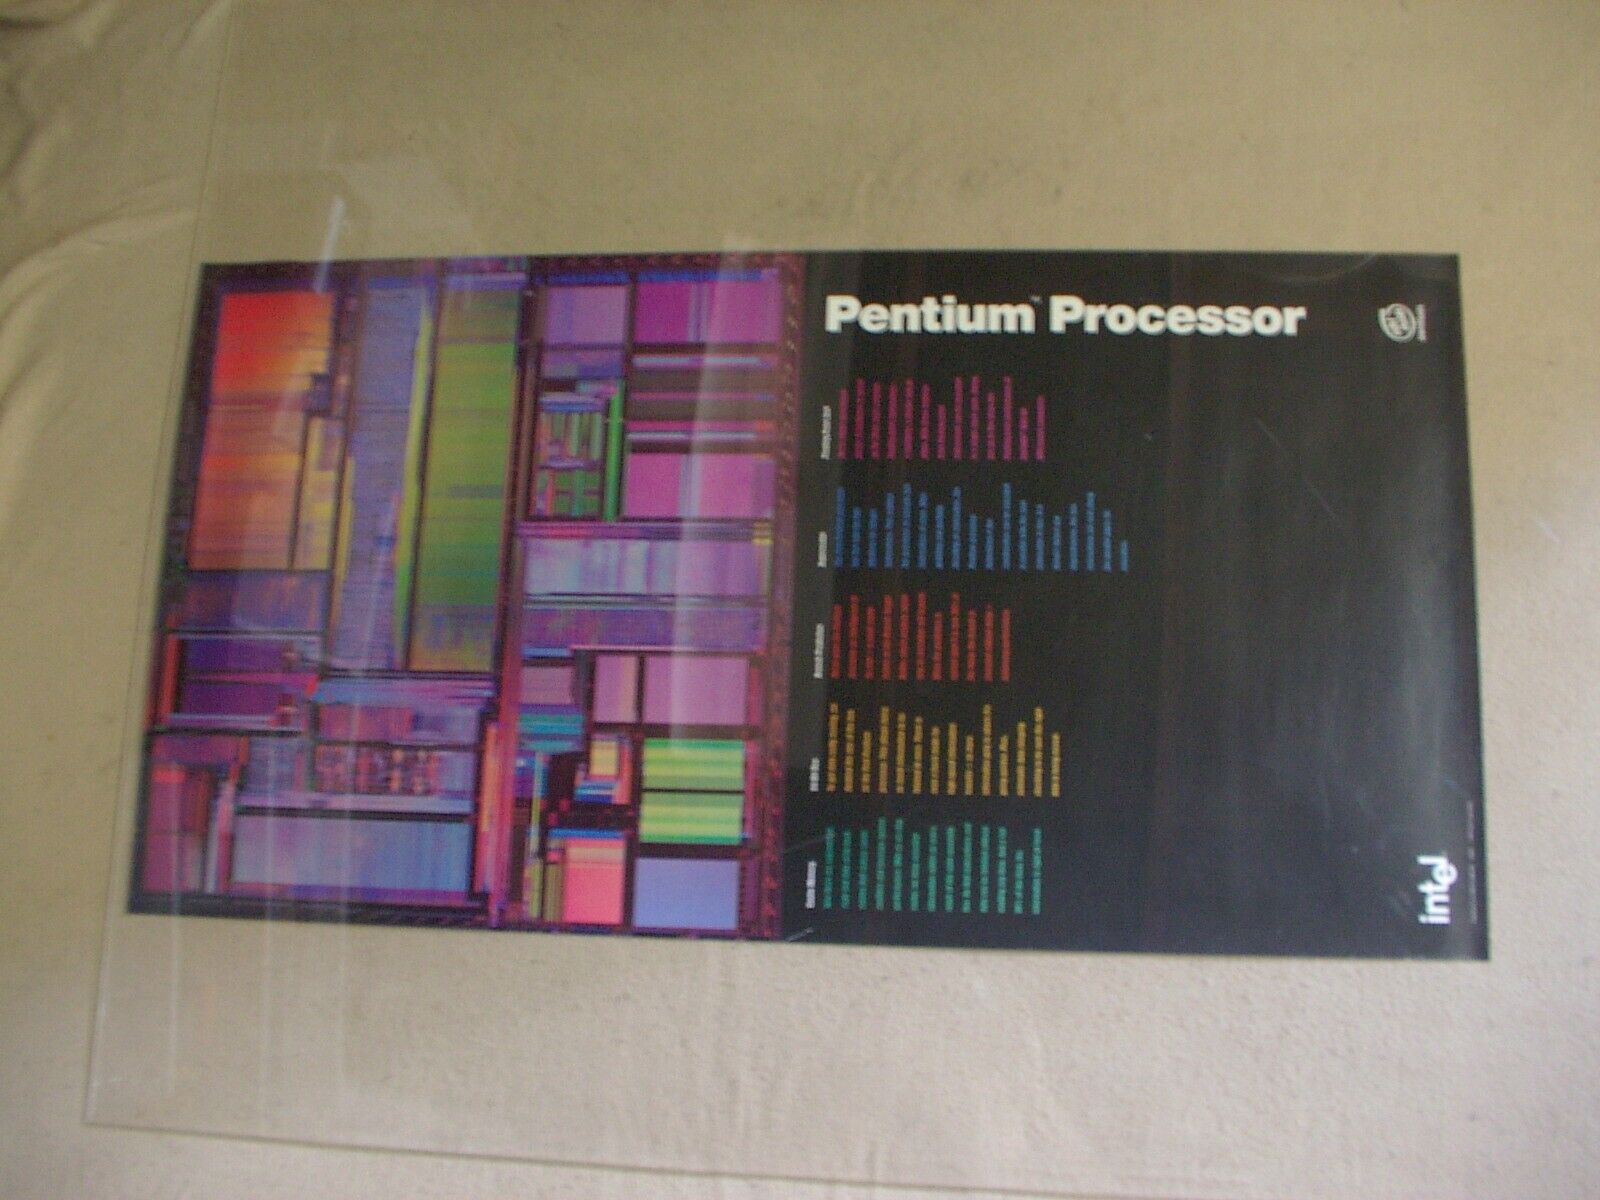 1993 Intel Processor diagram/promotional poster